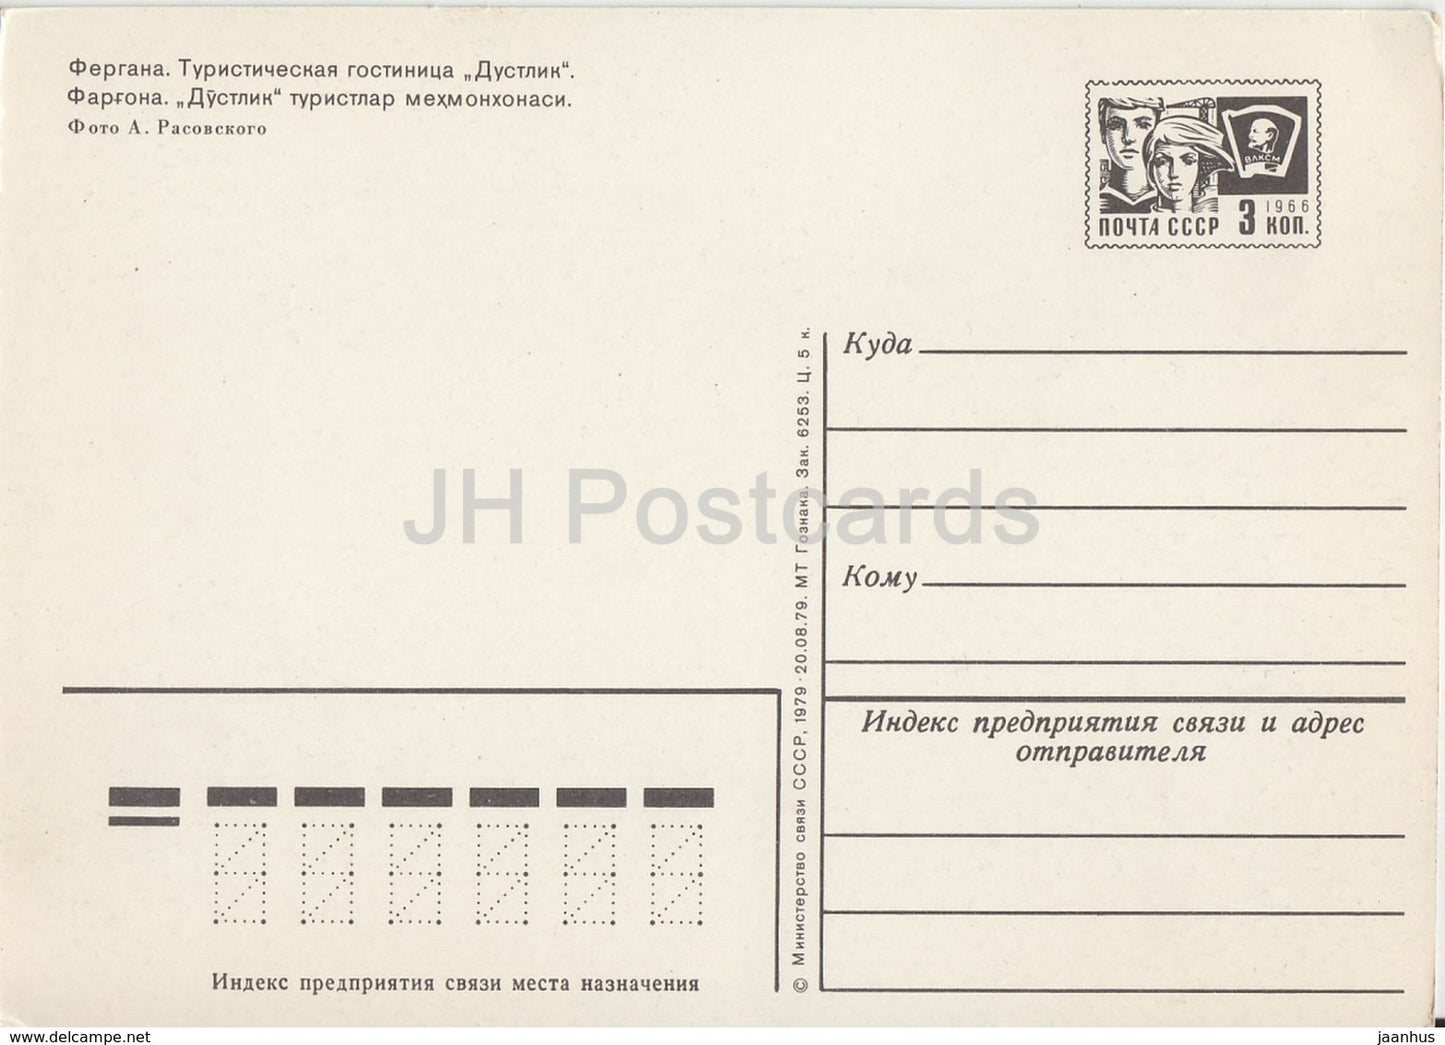 Fergana - Tourist hotel Dustlik - postal stationery - 1979 - Uzbekistan USSR - unused